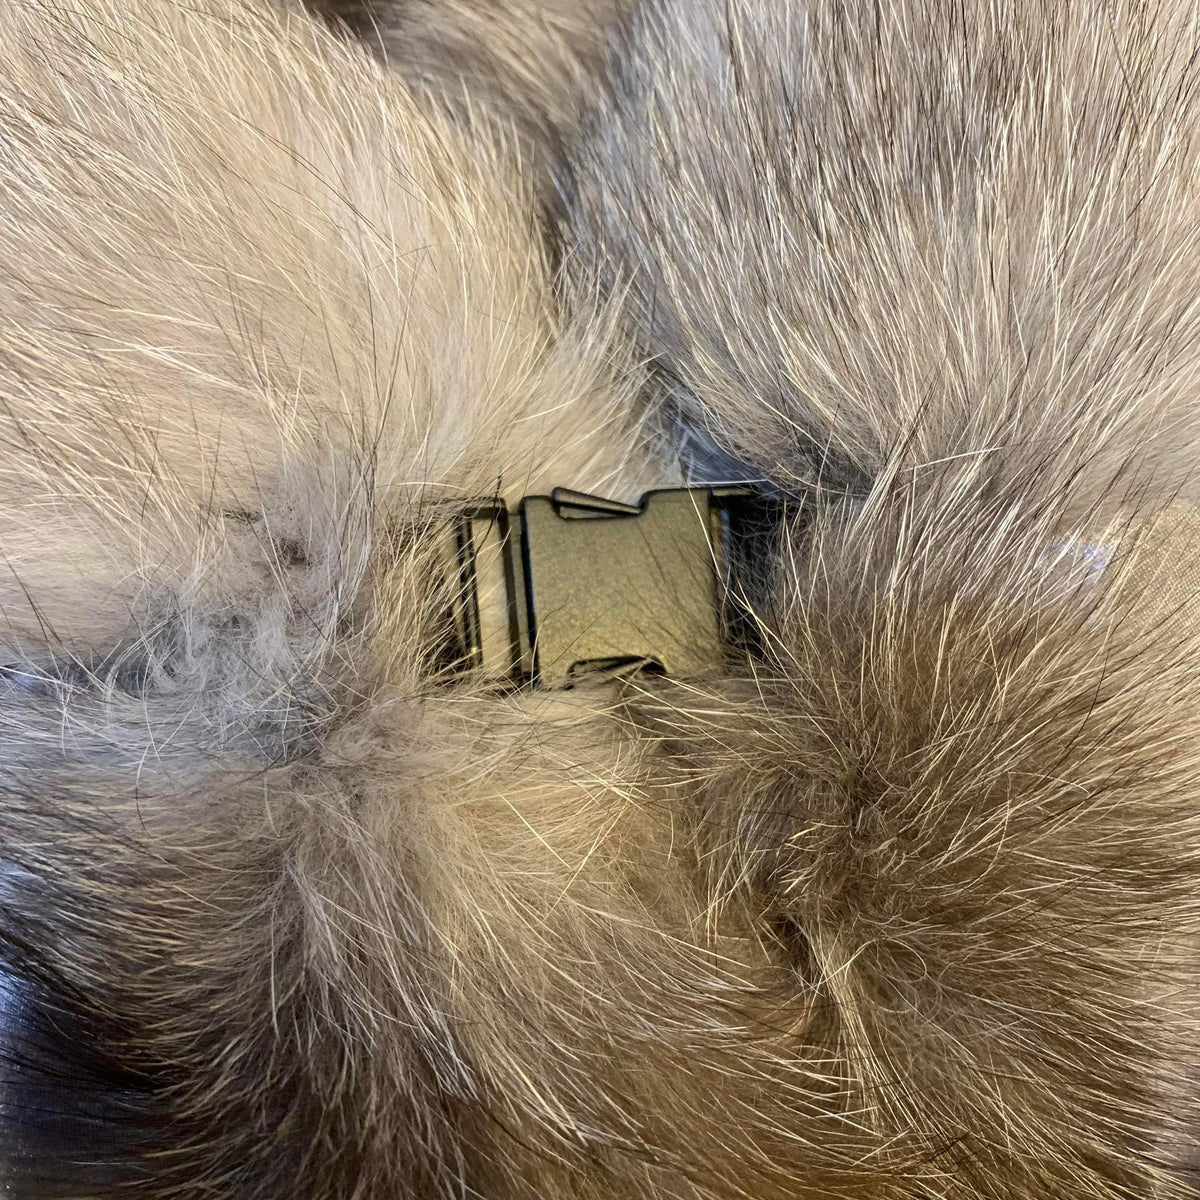 Barya NewYork Men's Full Arctic Silver Fox Fur Coat - Dudes Boutique